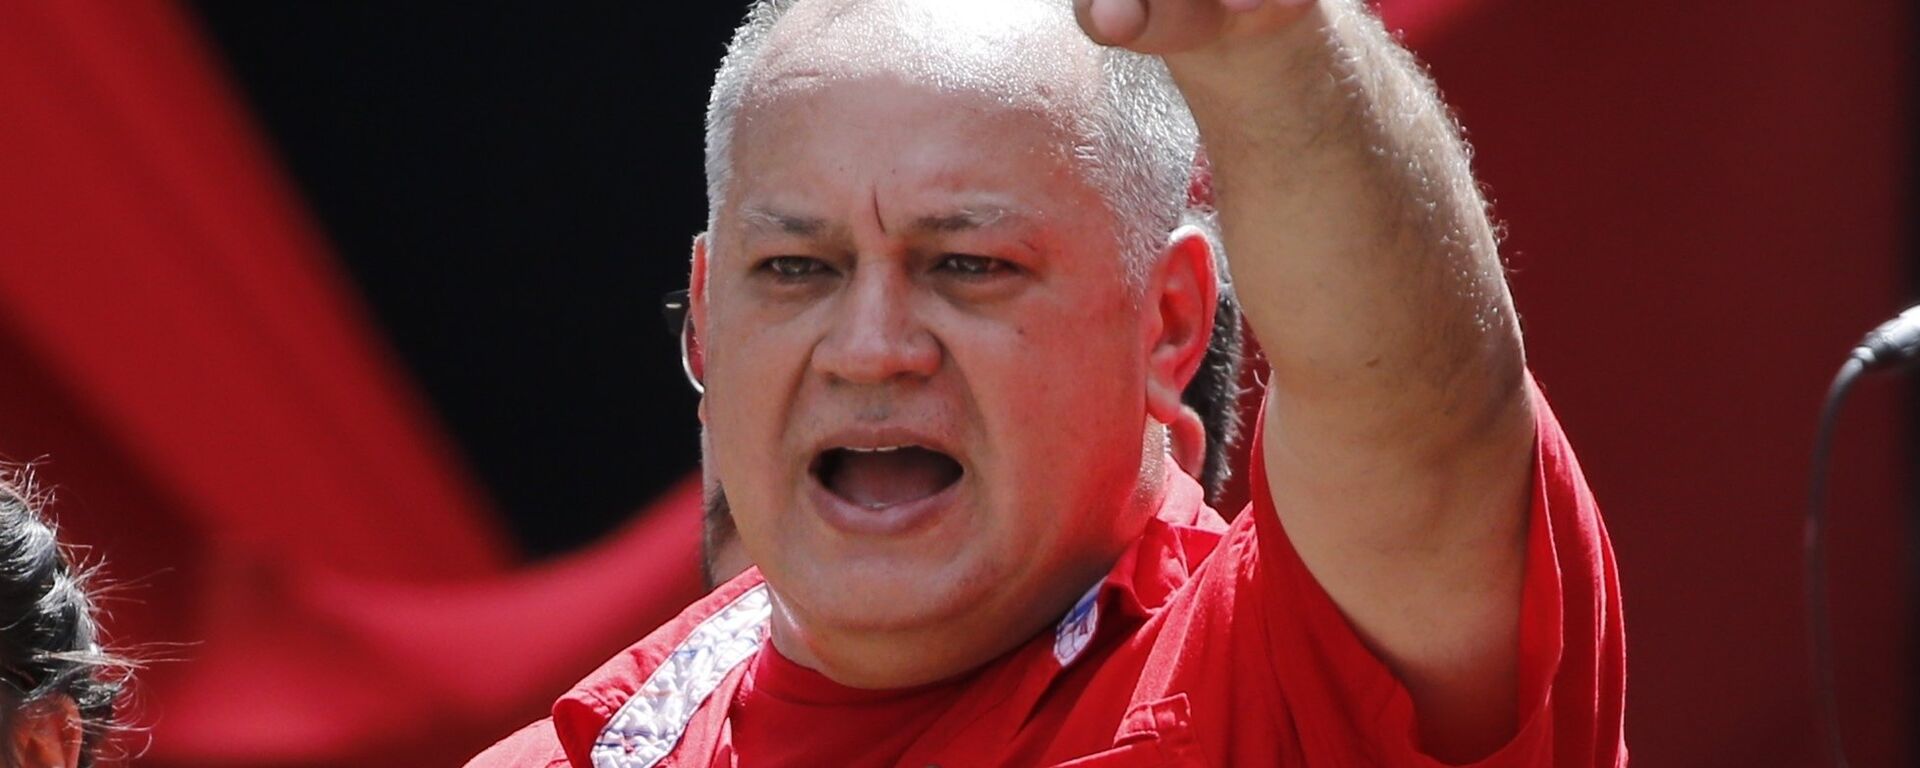 Diosdado Cabello, presidente de la Asamblea Nacional Constituyente de Venezuela - Sputnik Mundo, 1920, 05.03.2021